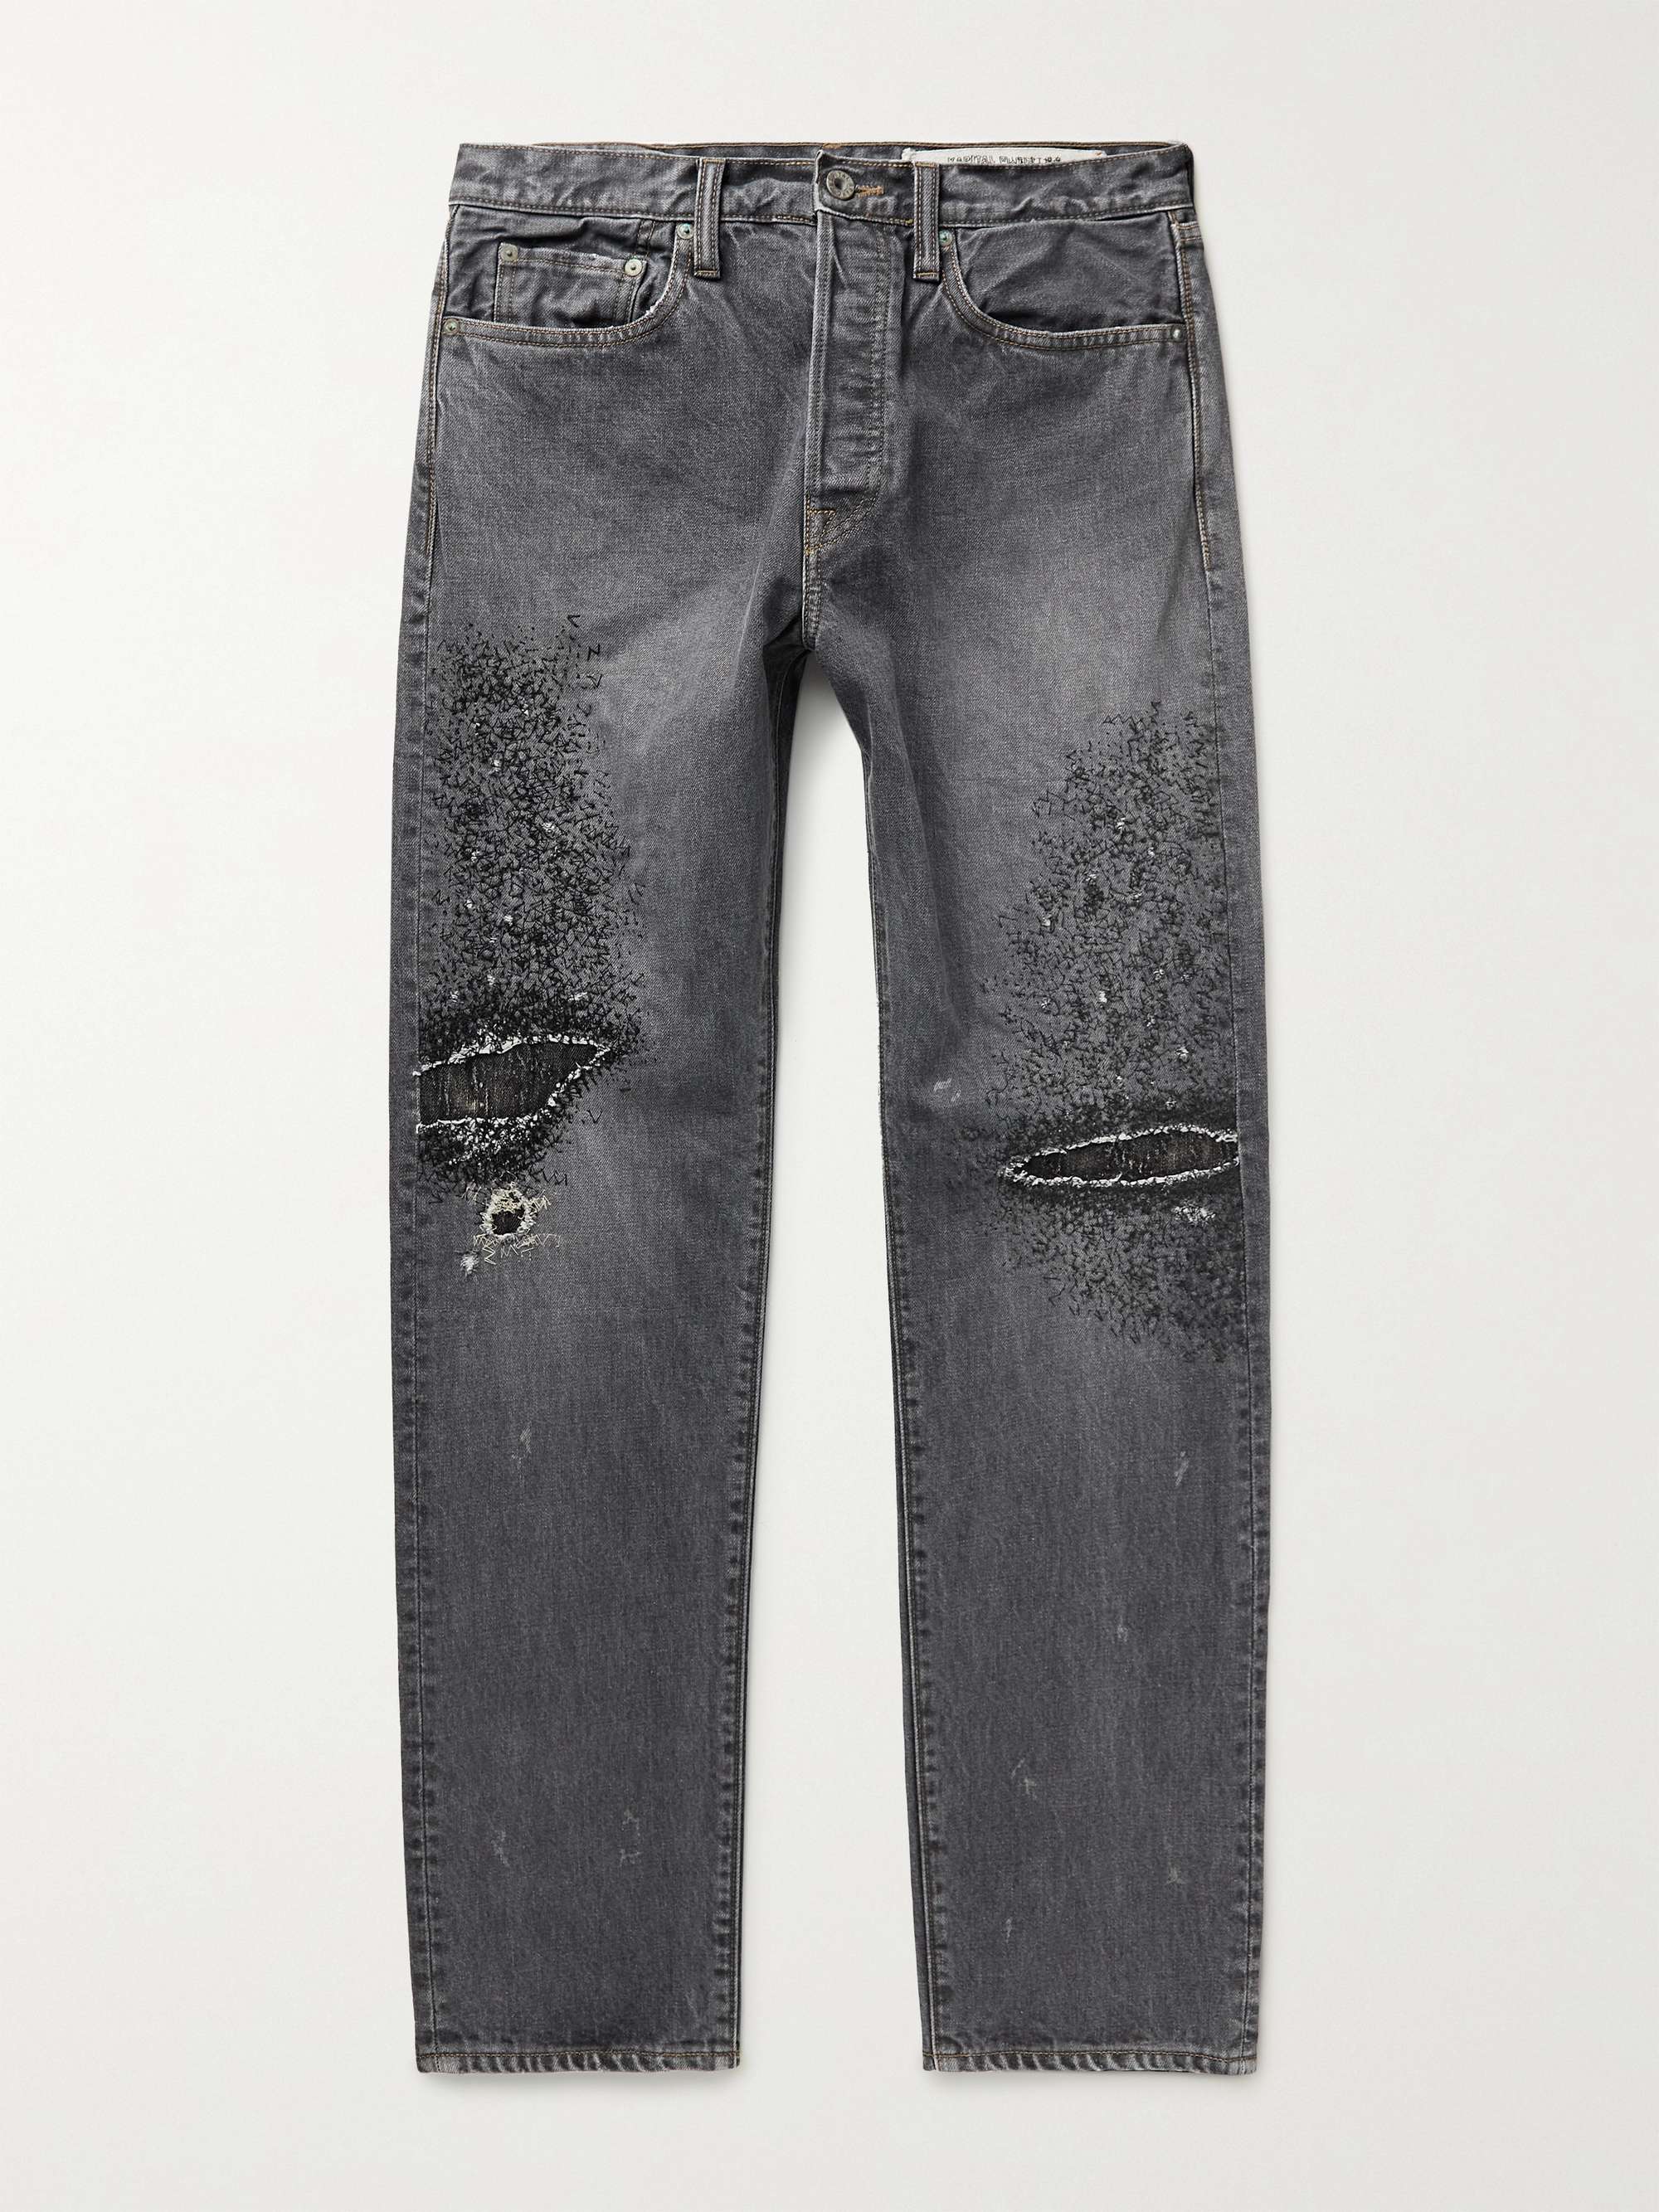 KAPITAL Monkey CISCO Distressed Denim Jeans